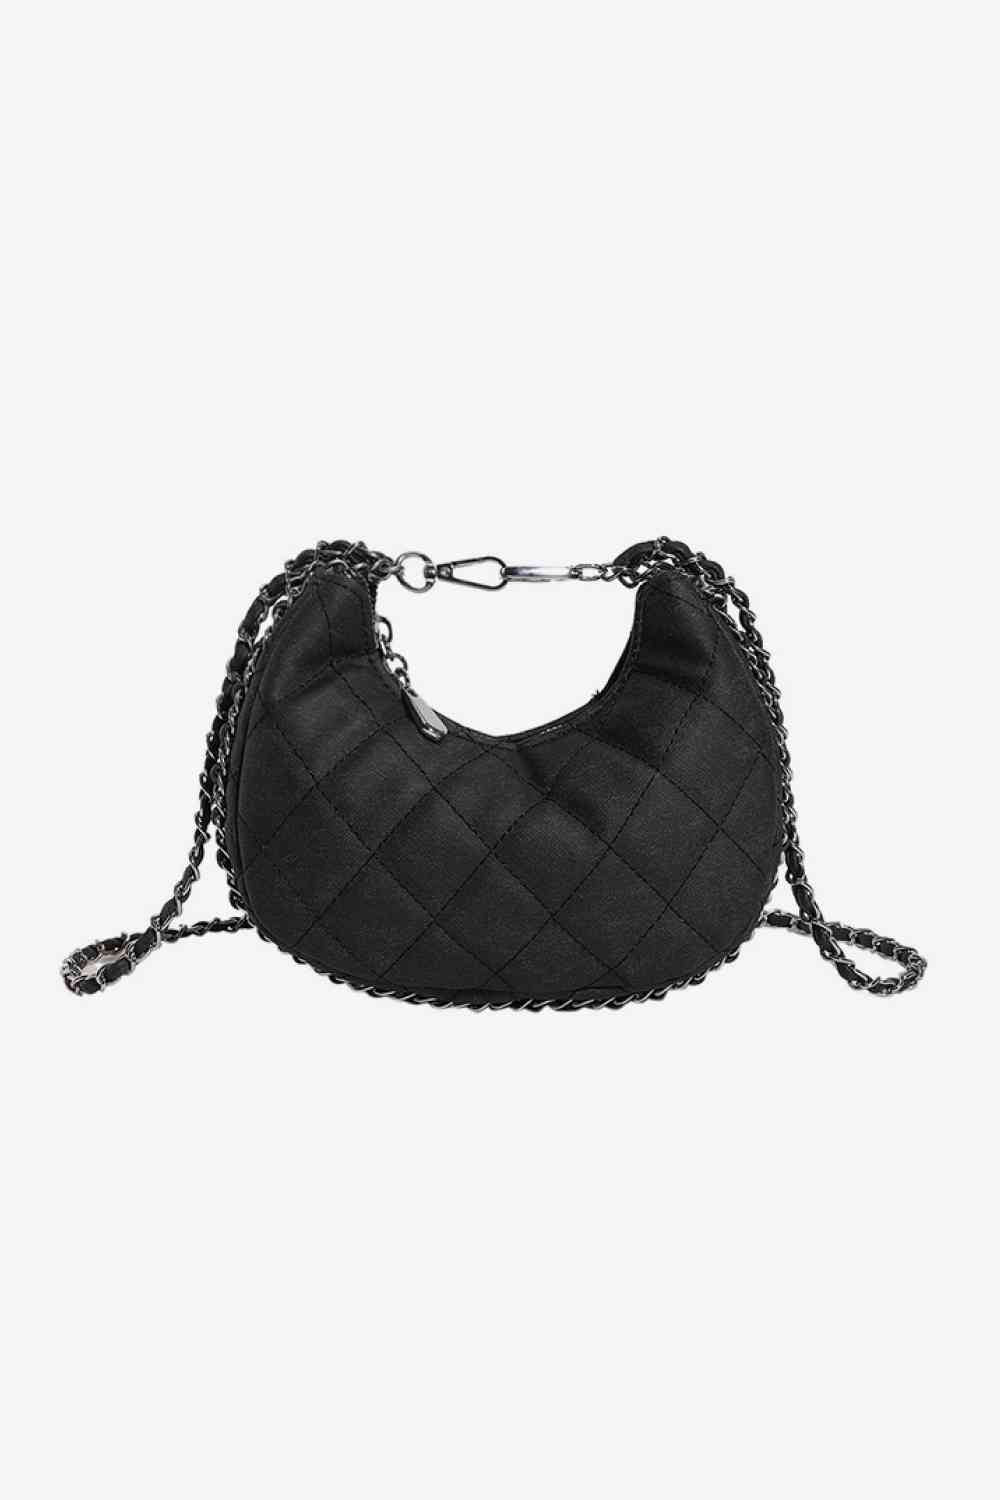 PU Leather Handbag - Black / One Size - Women Bags & Wallets - Handbags - 6 - 2024